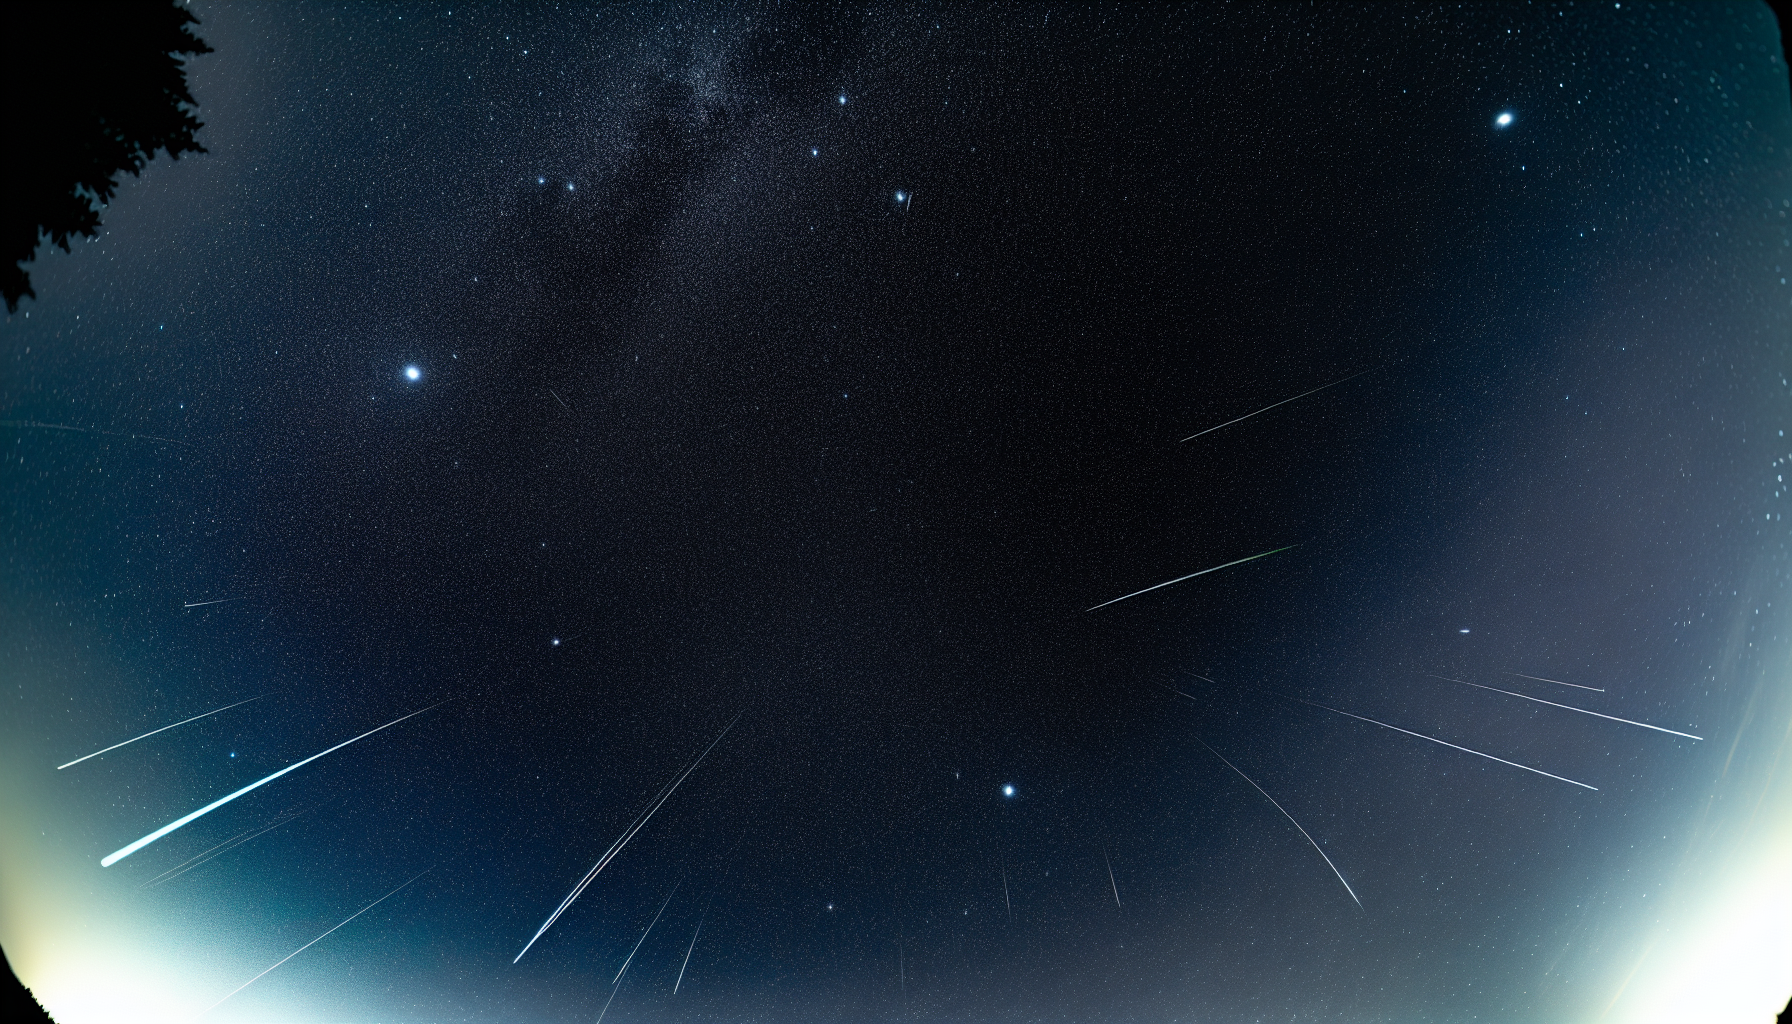 Photo of the Ursid meteor shower